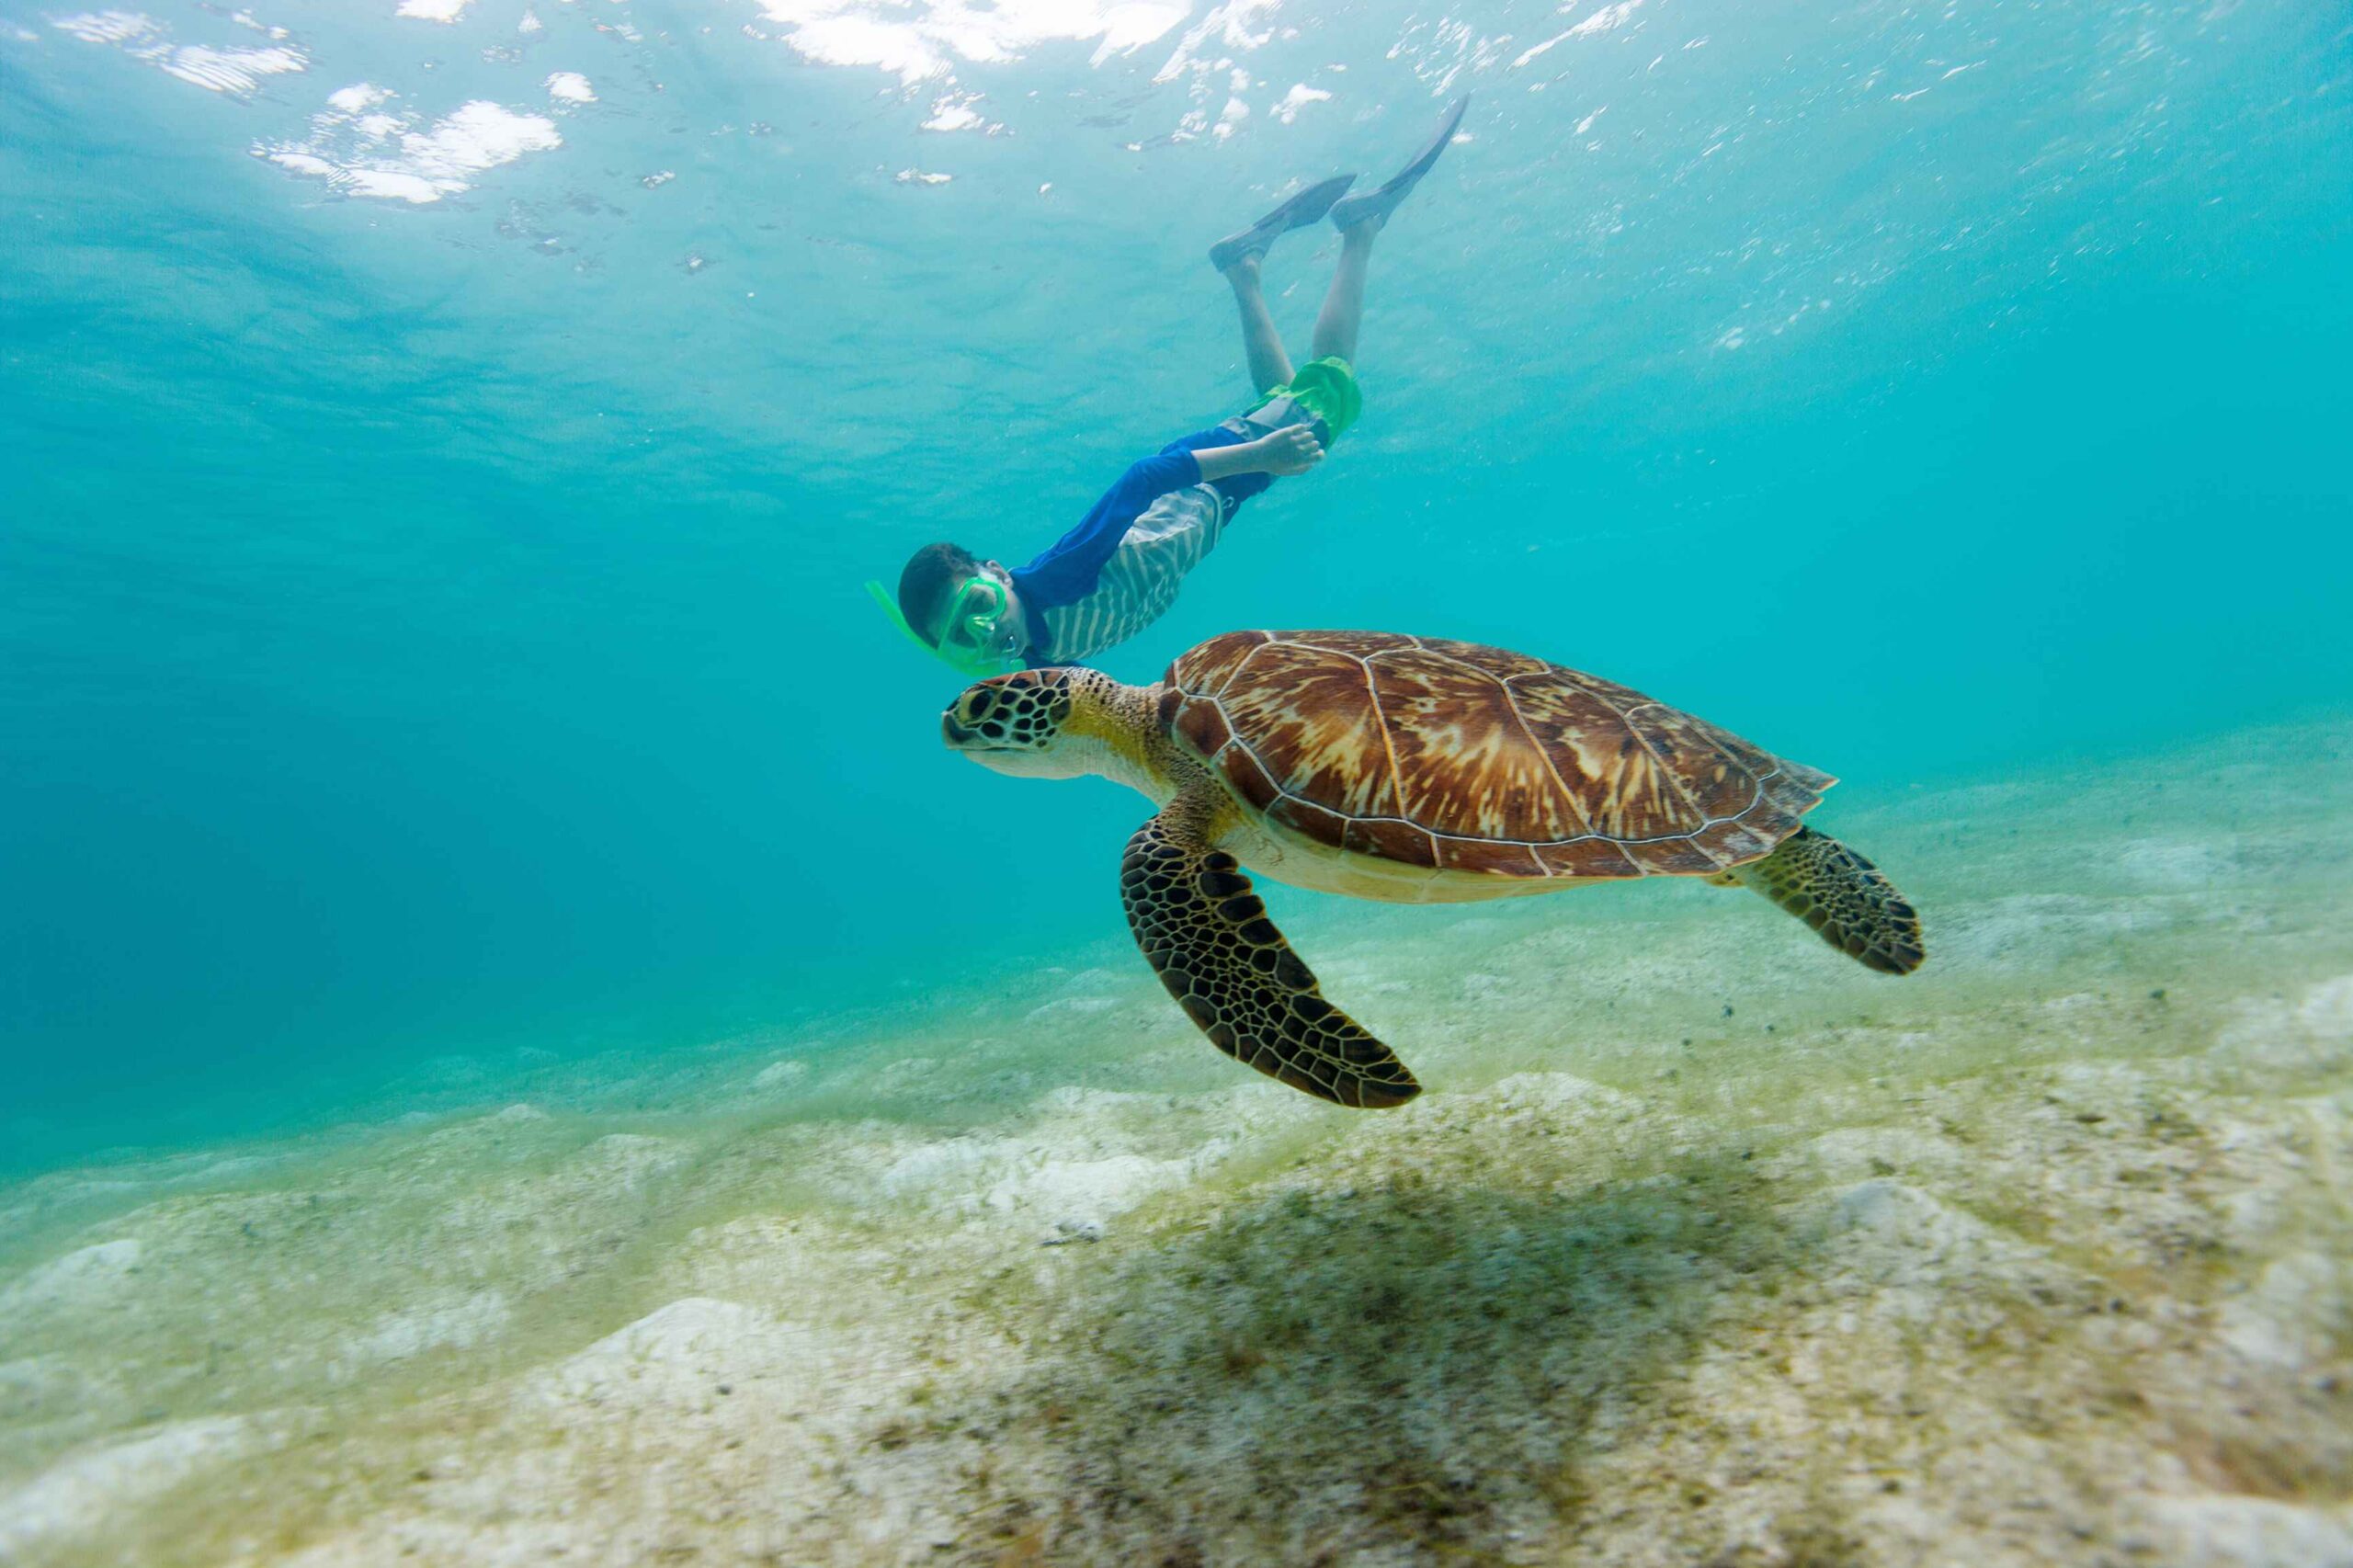 Snorkeler free diving beside a sea turtle in Belize.